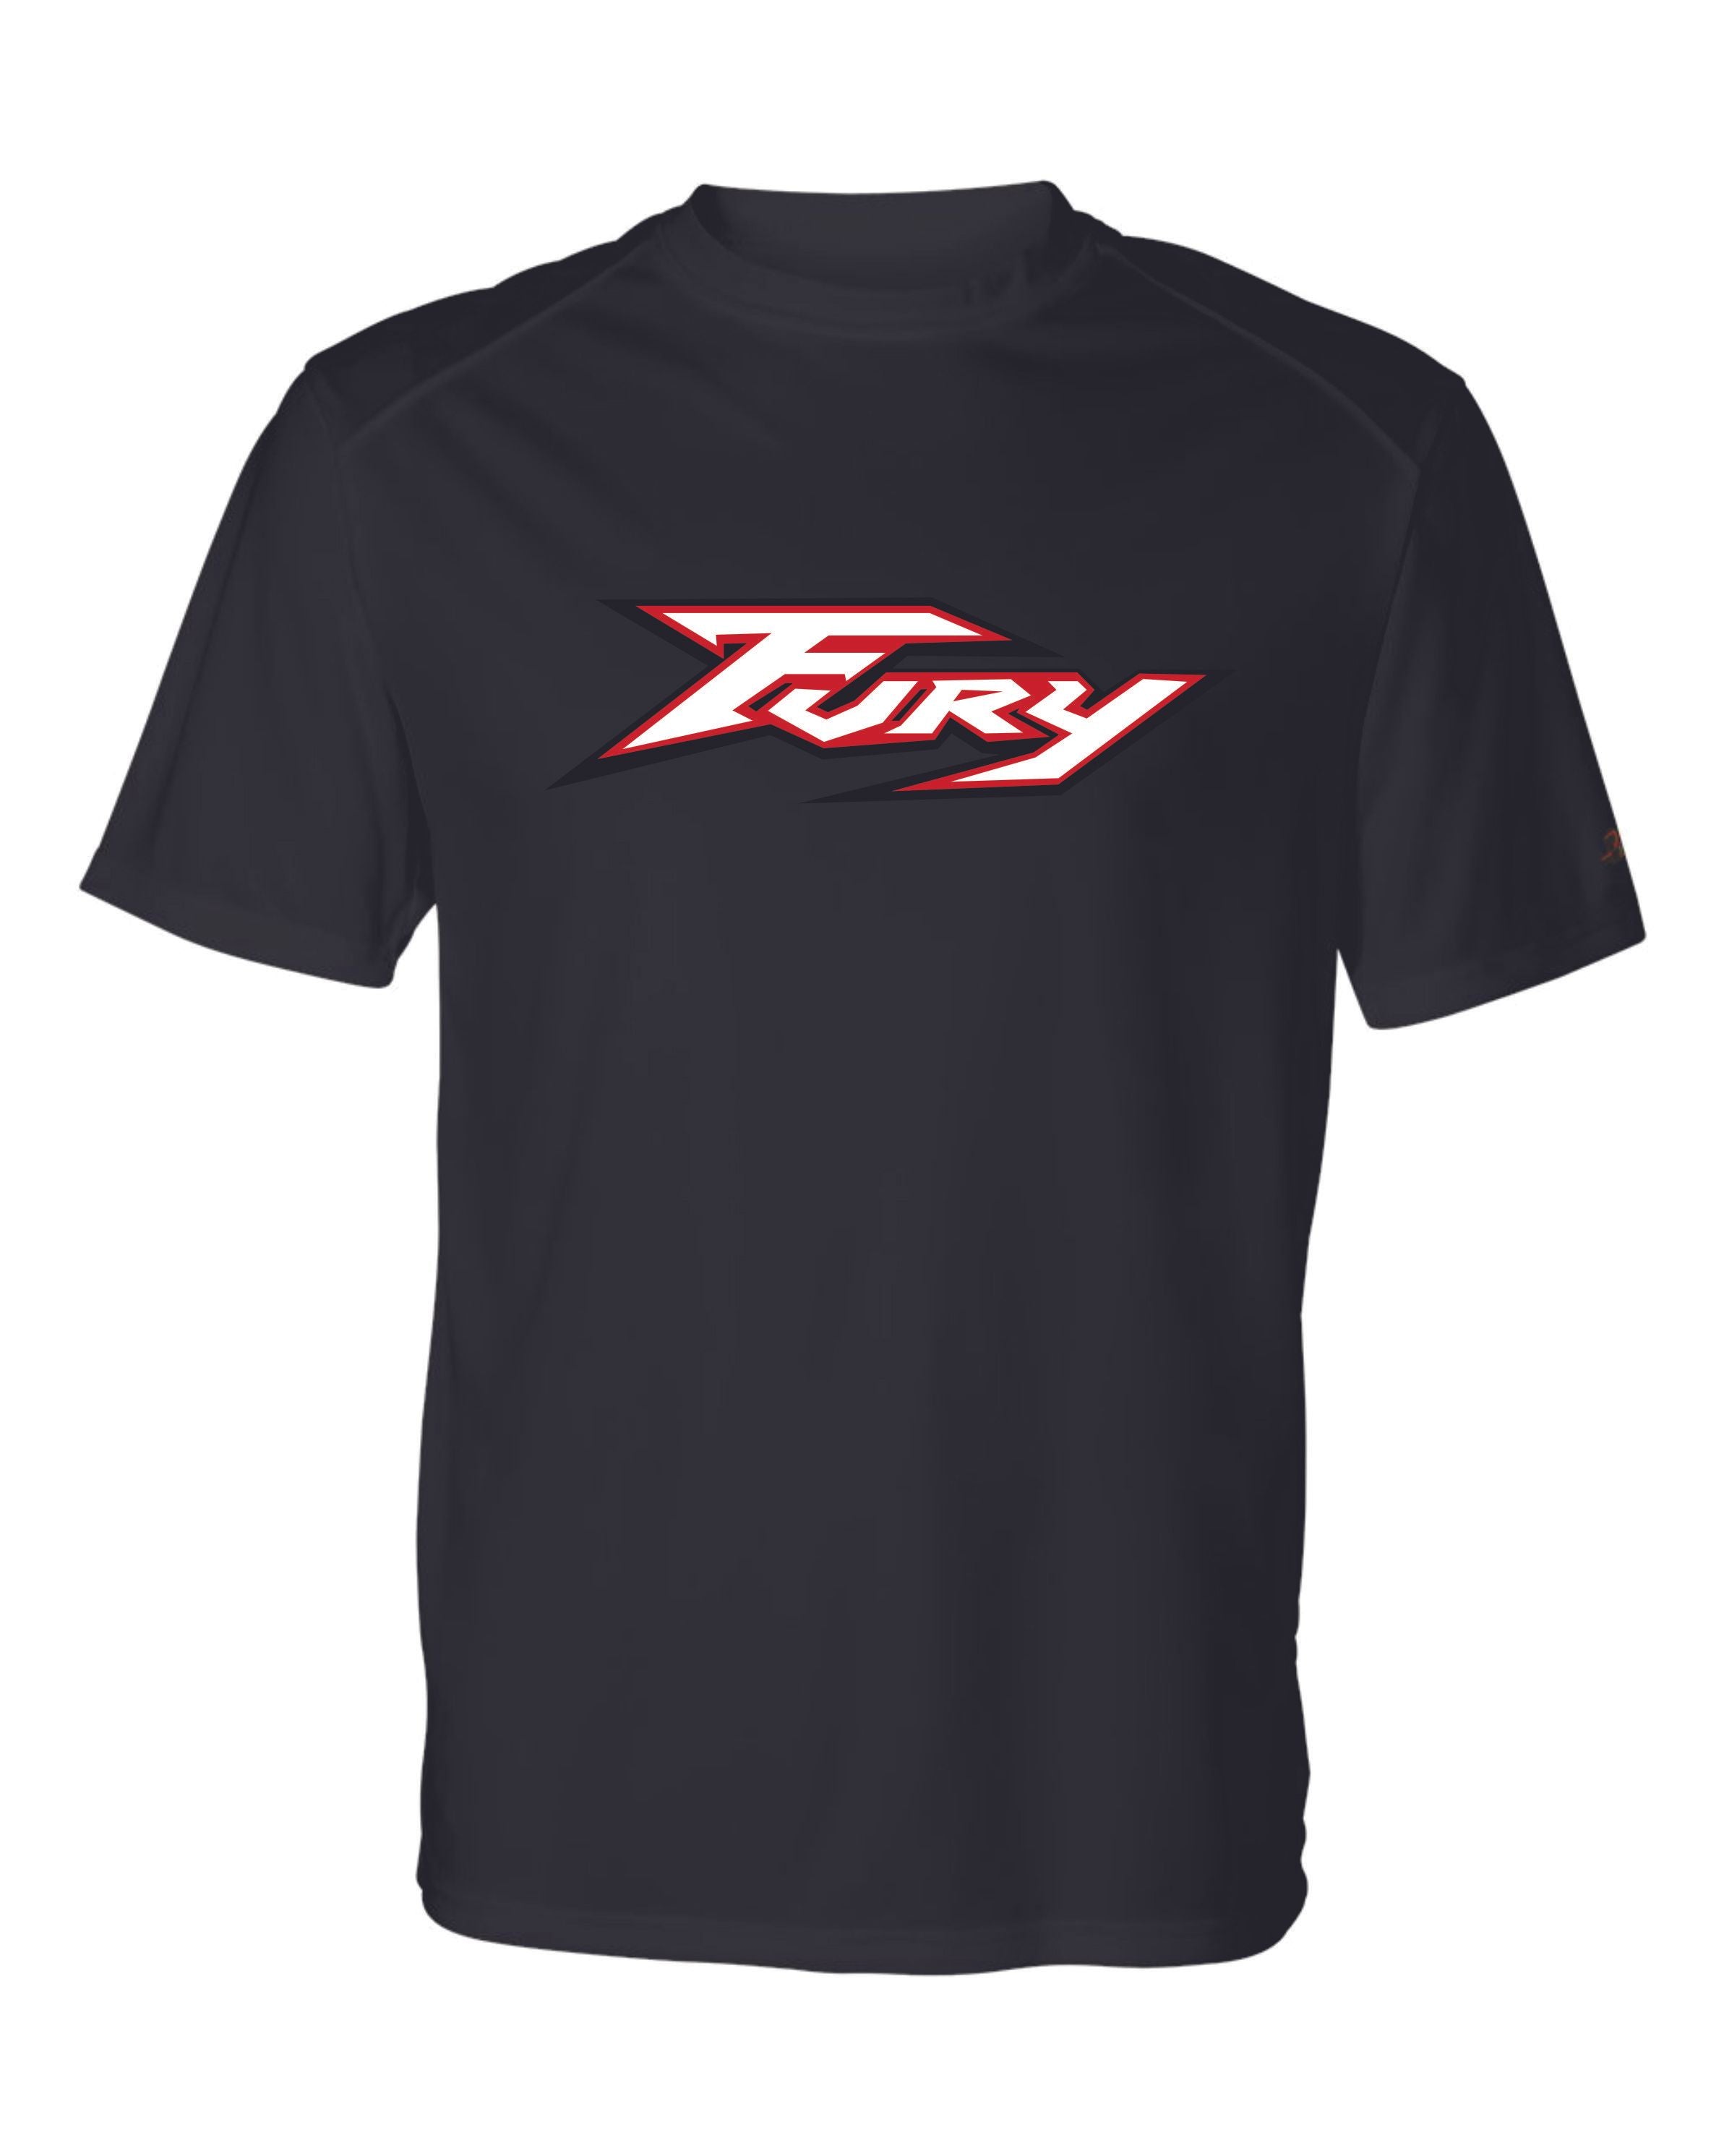 Fury Short Sleeve Badger Dri Fit T shirt WOMEN